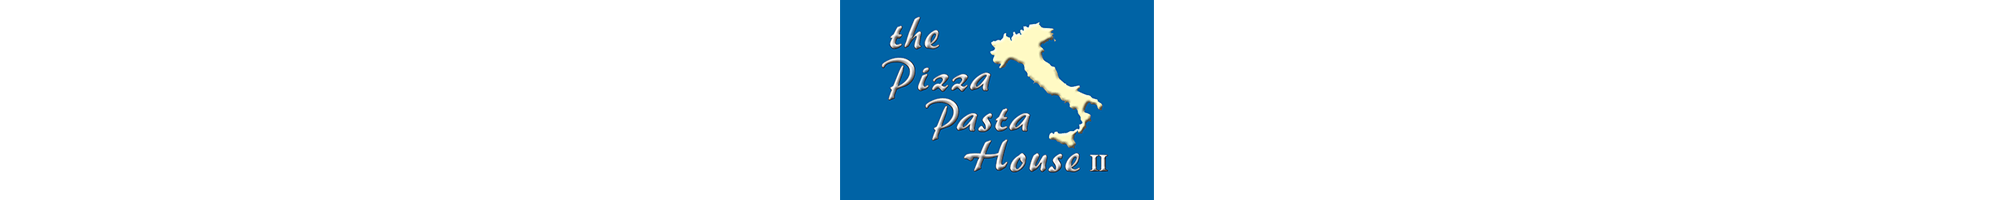 Pizza & Pasta House II